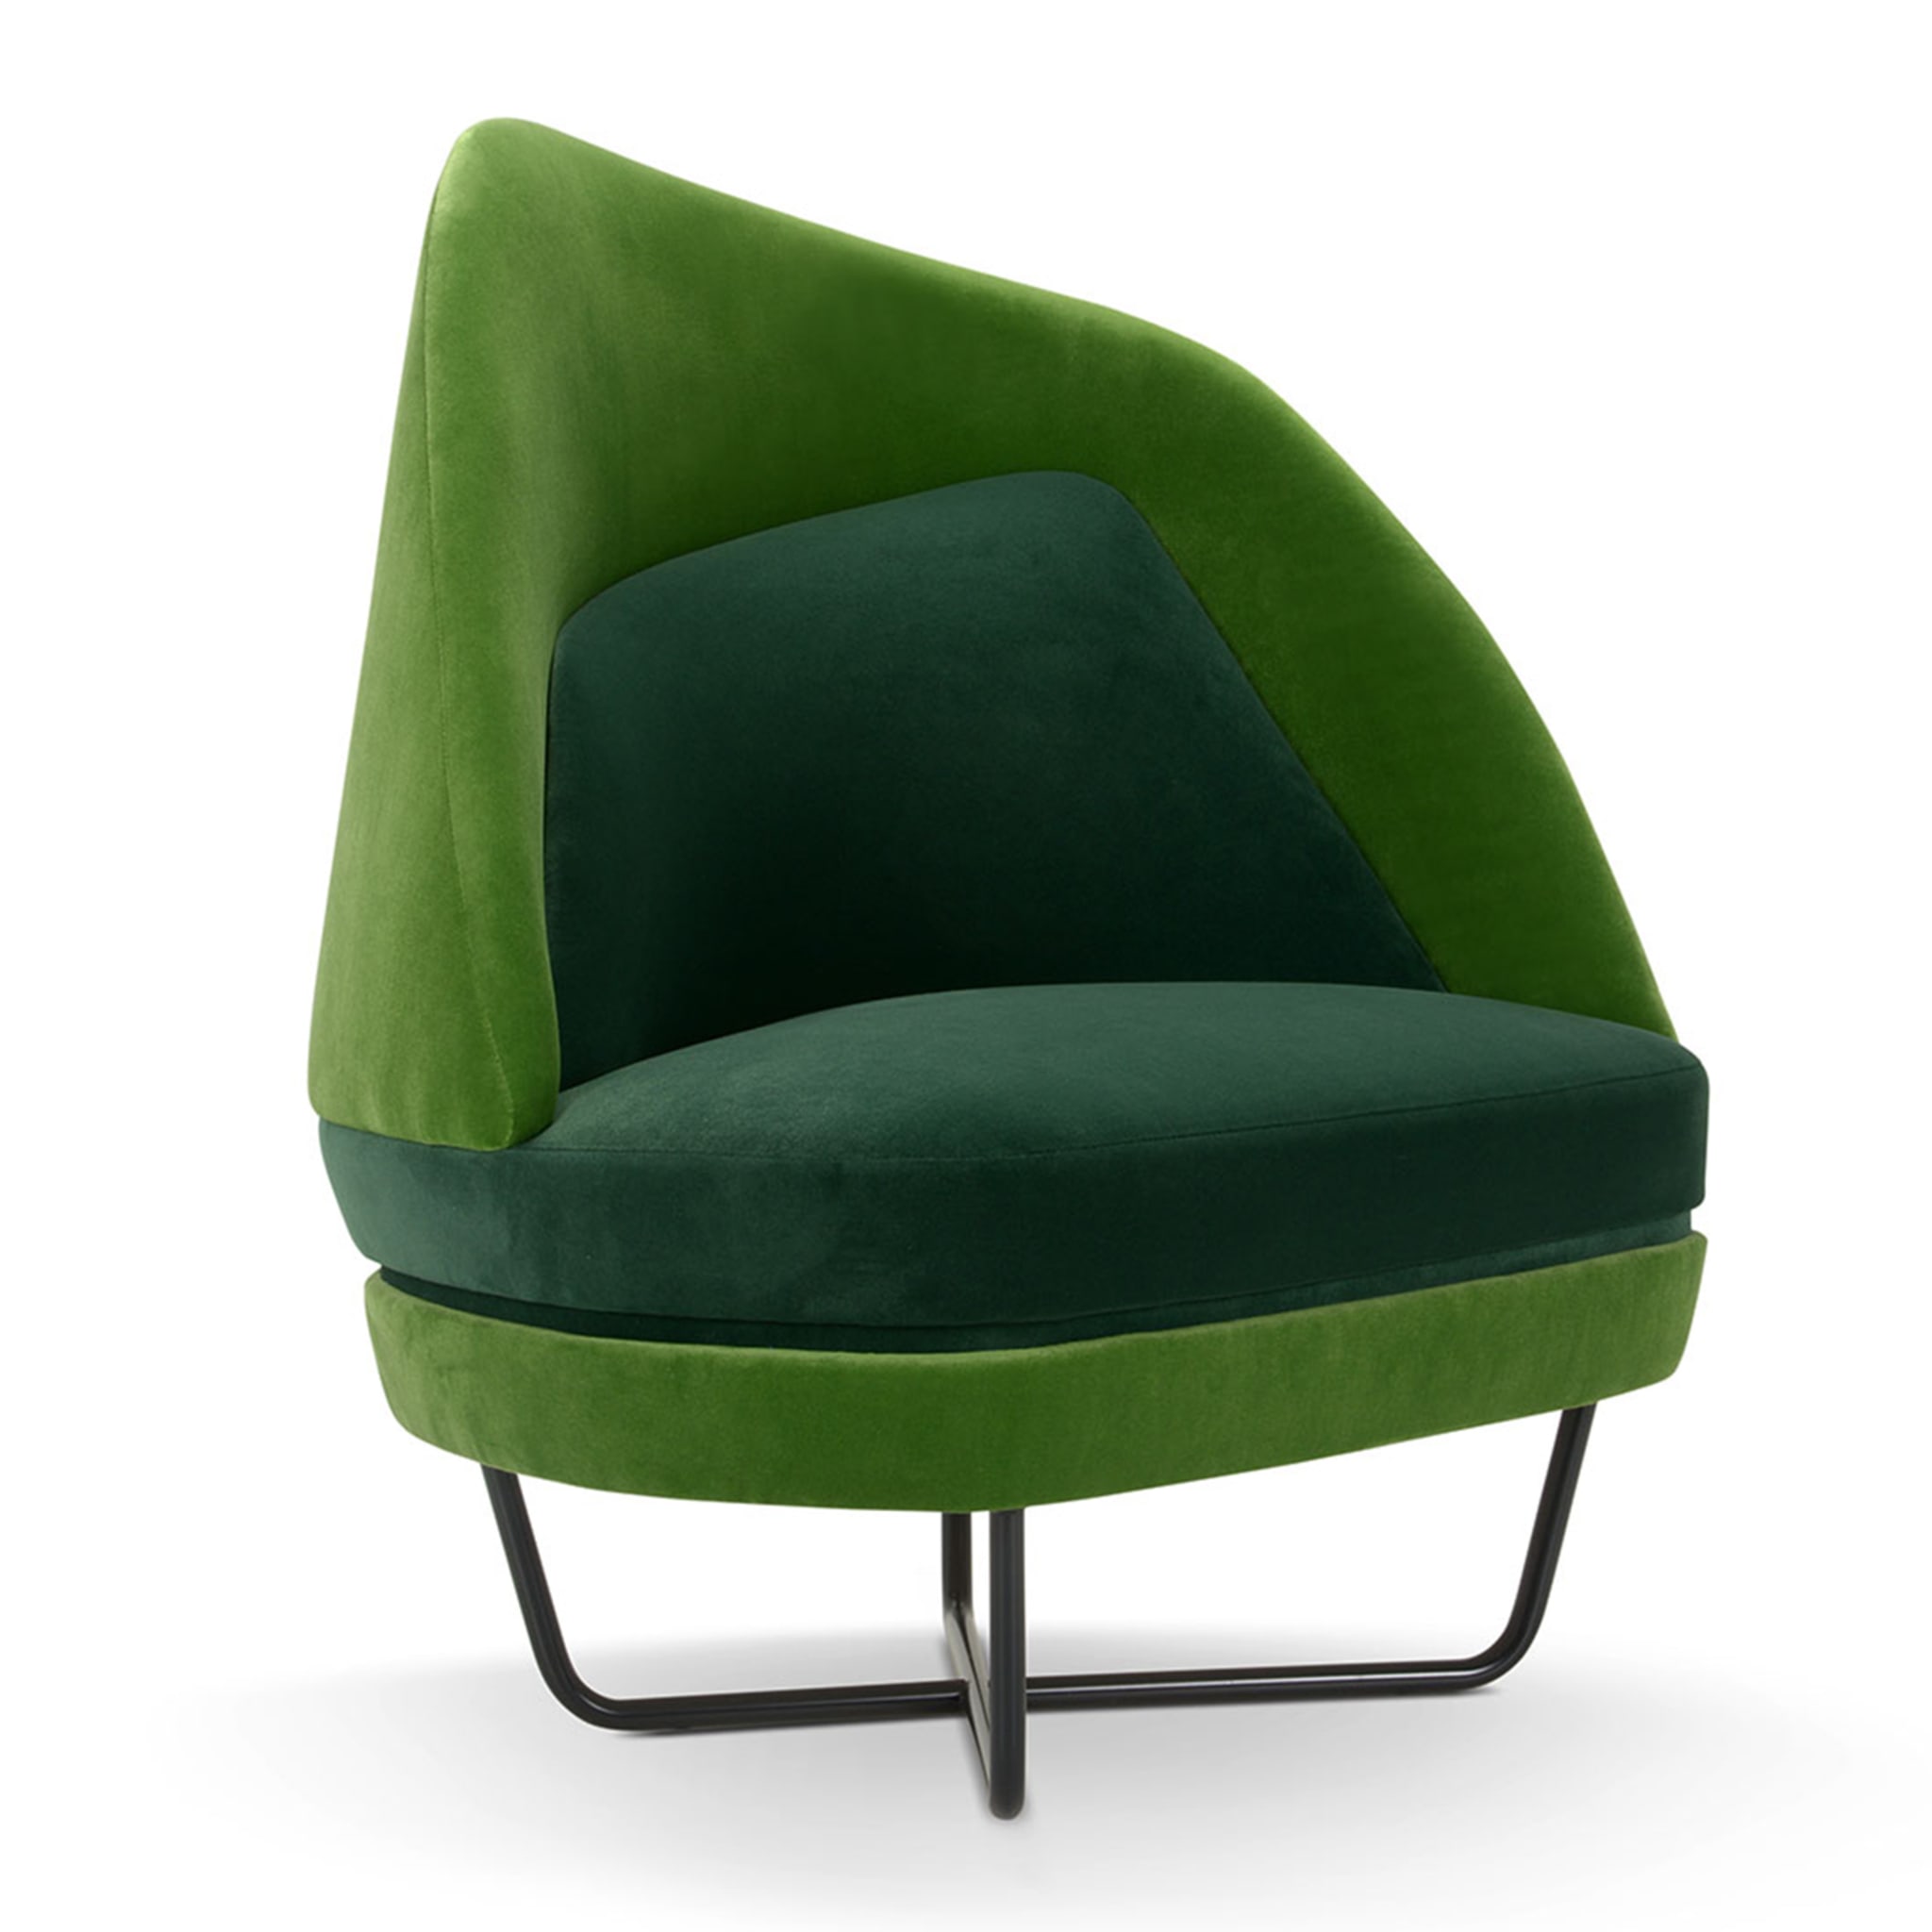 Bixib Green Armchair by Luca Alessandrini - Alternative view 1